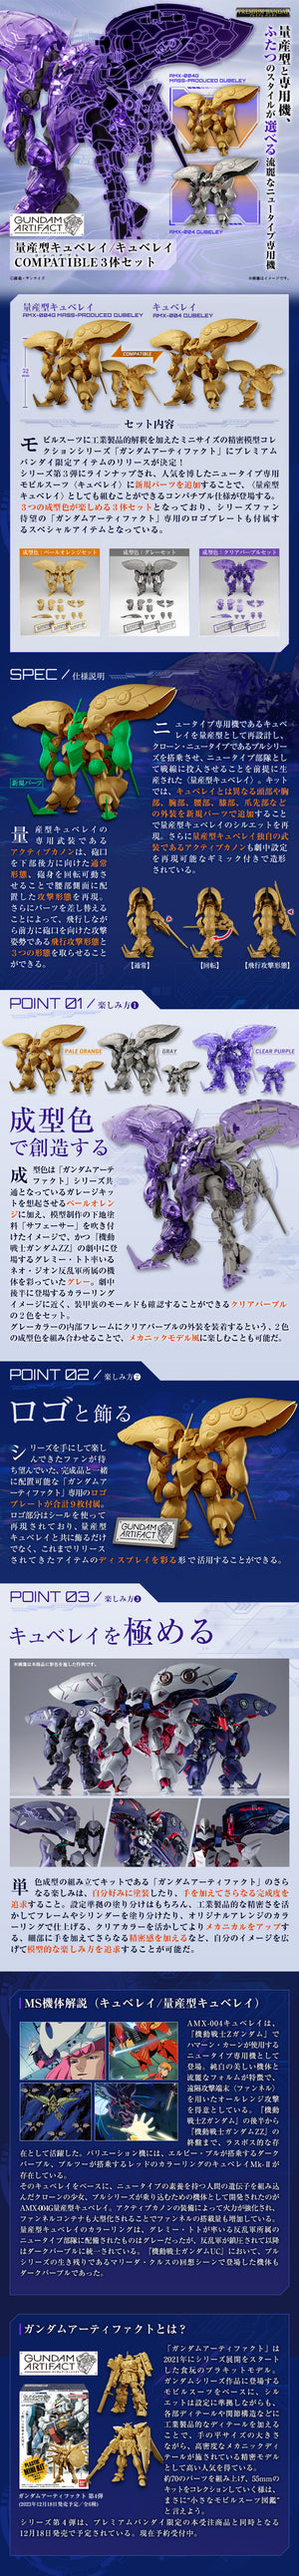 Gundam Artifact Mass Production Type Qubeley/Qubeley COMPATIBLE 3 Body Set (January & February Ship Date)